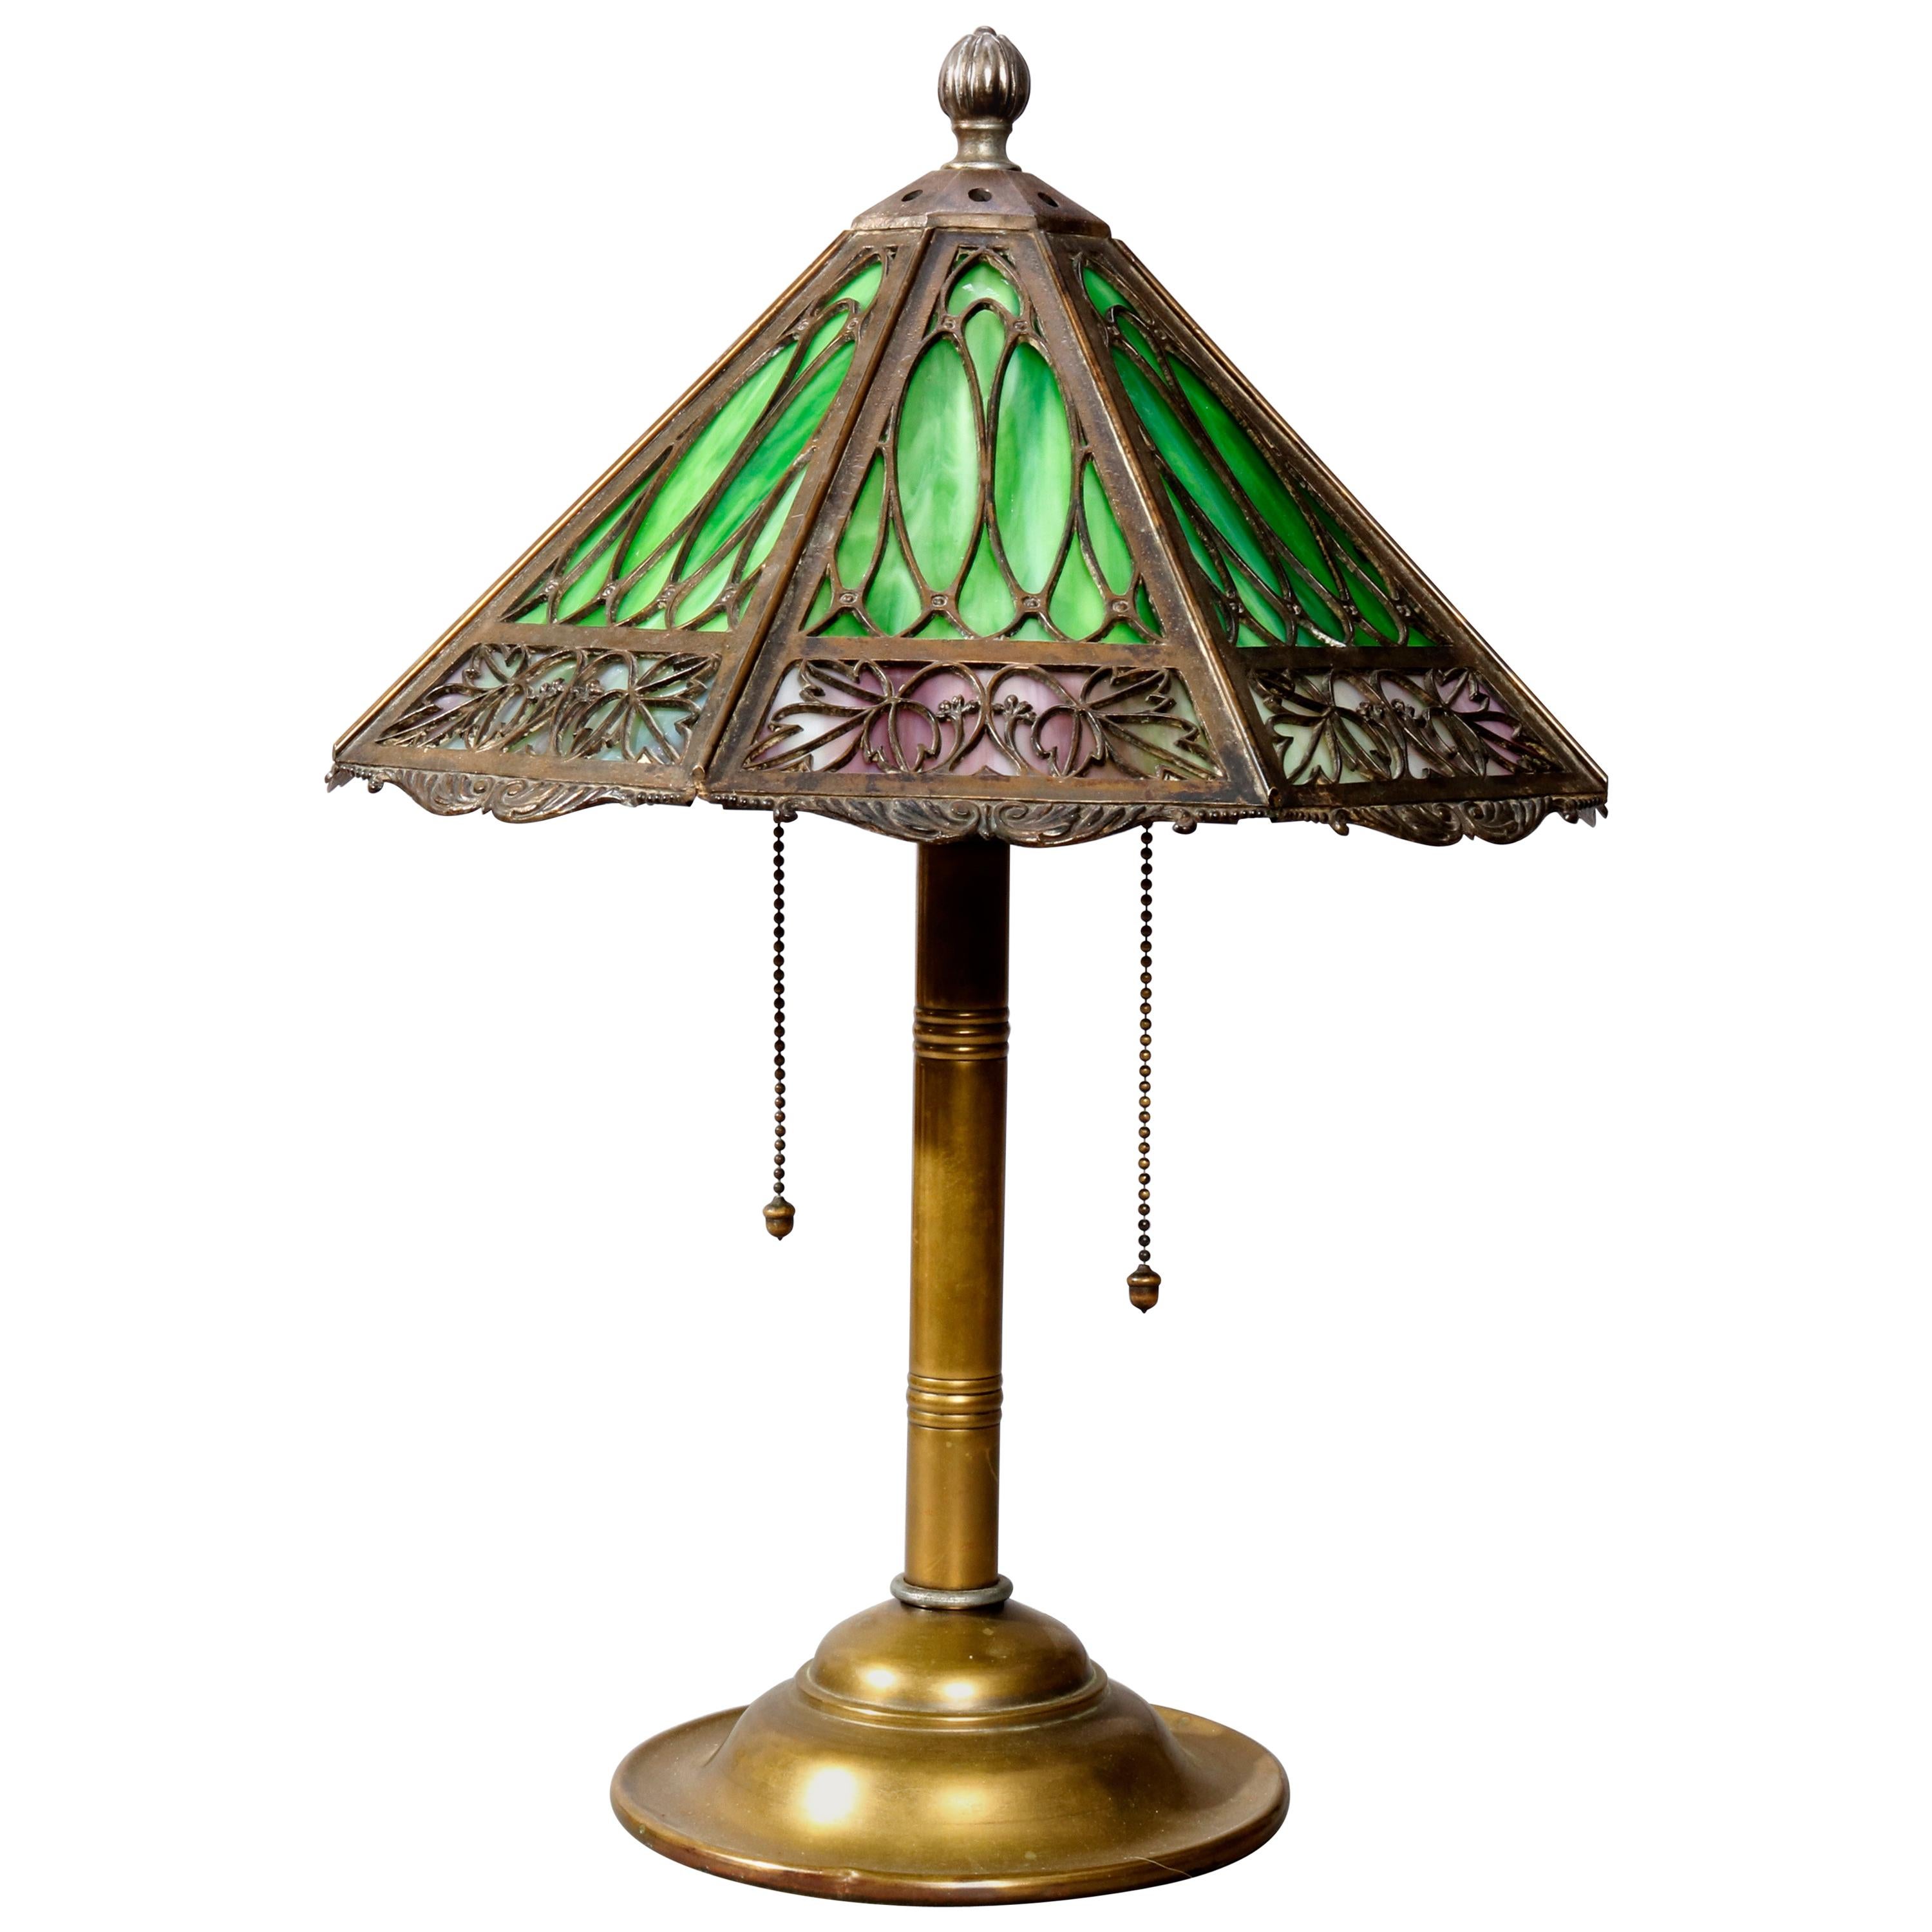 Antique Arts & Crafts Bradly & Hubbard Slag Glass Table Lamp, circa 1920